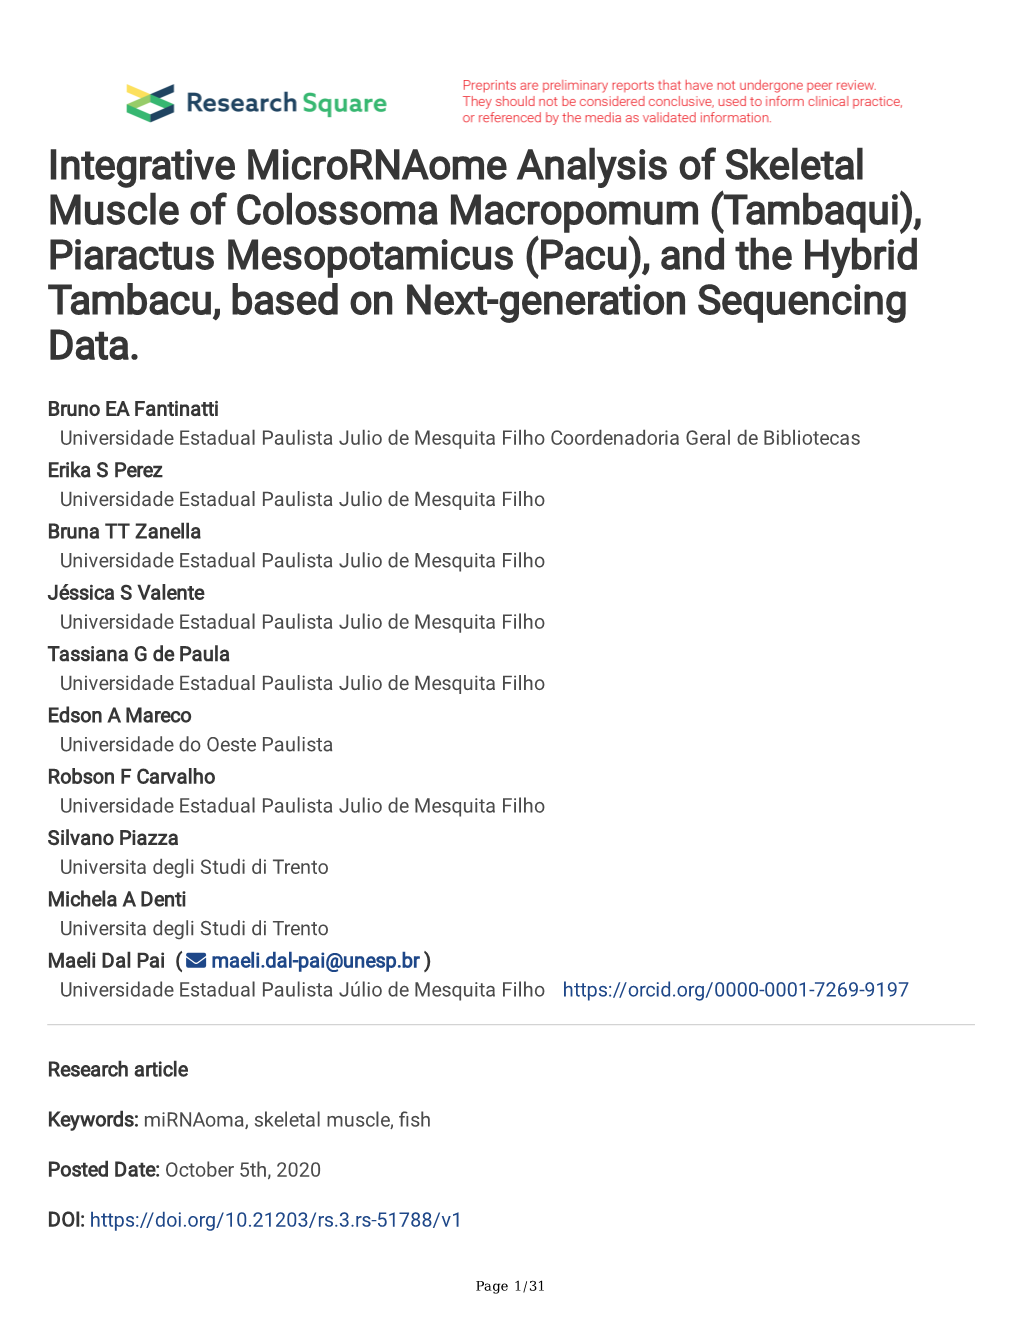 Integrative Micrornaome Analysis of Skeletal Muscle of Colossoma Macropomum (Tambaqui), Piaractus Mesopotamicus (Pacu), And